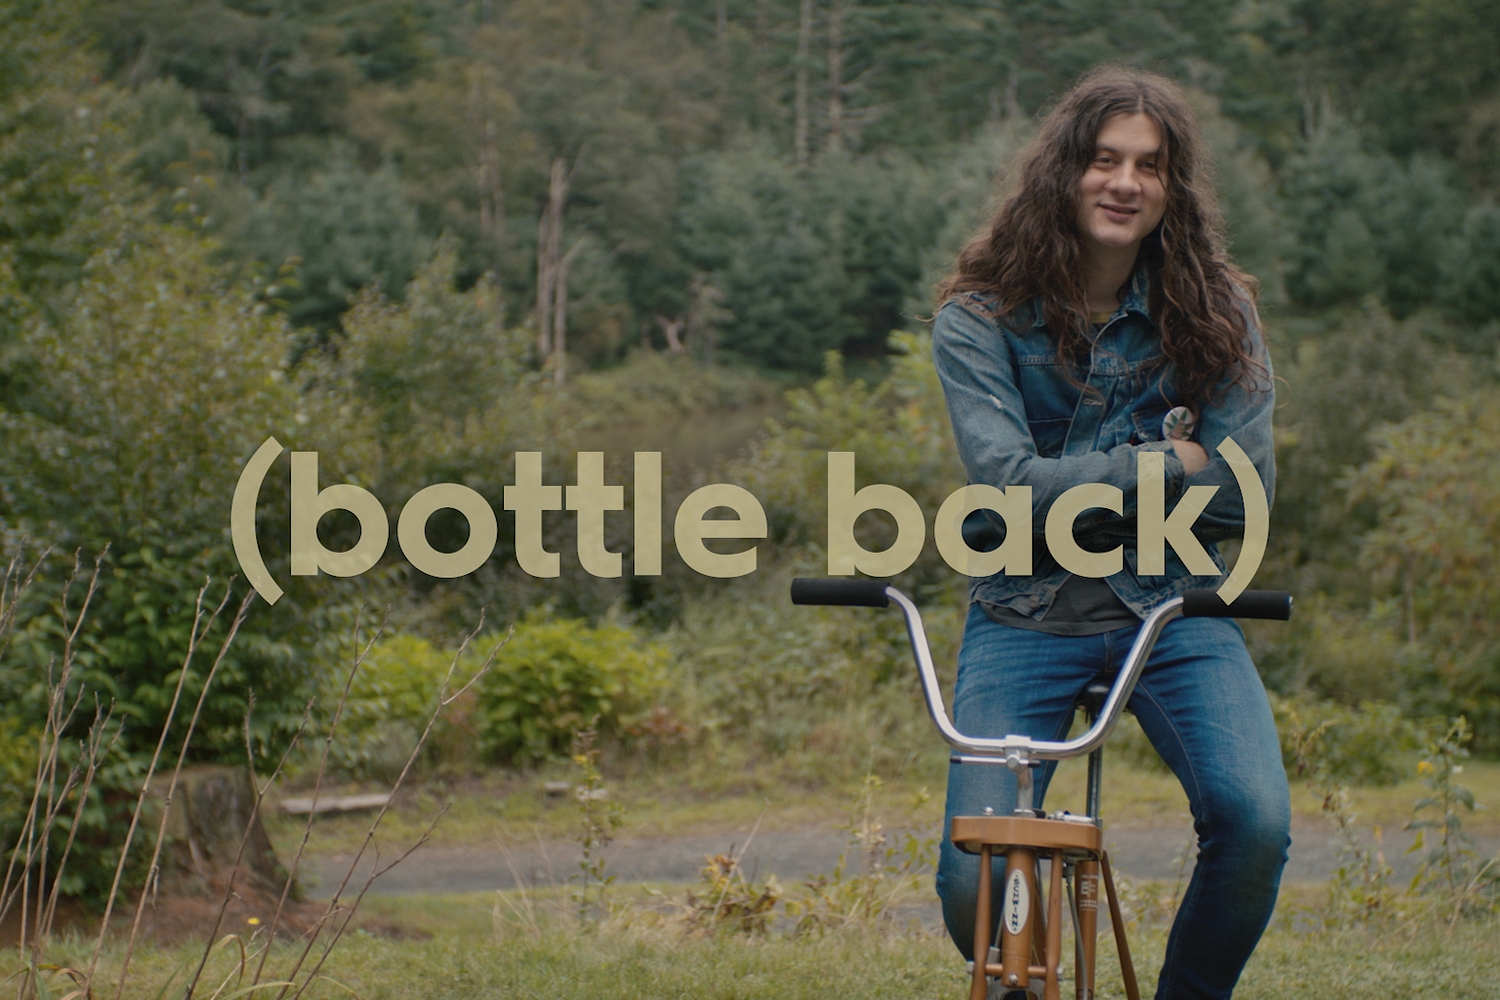 Kurt Vile unveils '(bottle back)' documentary